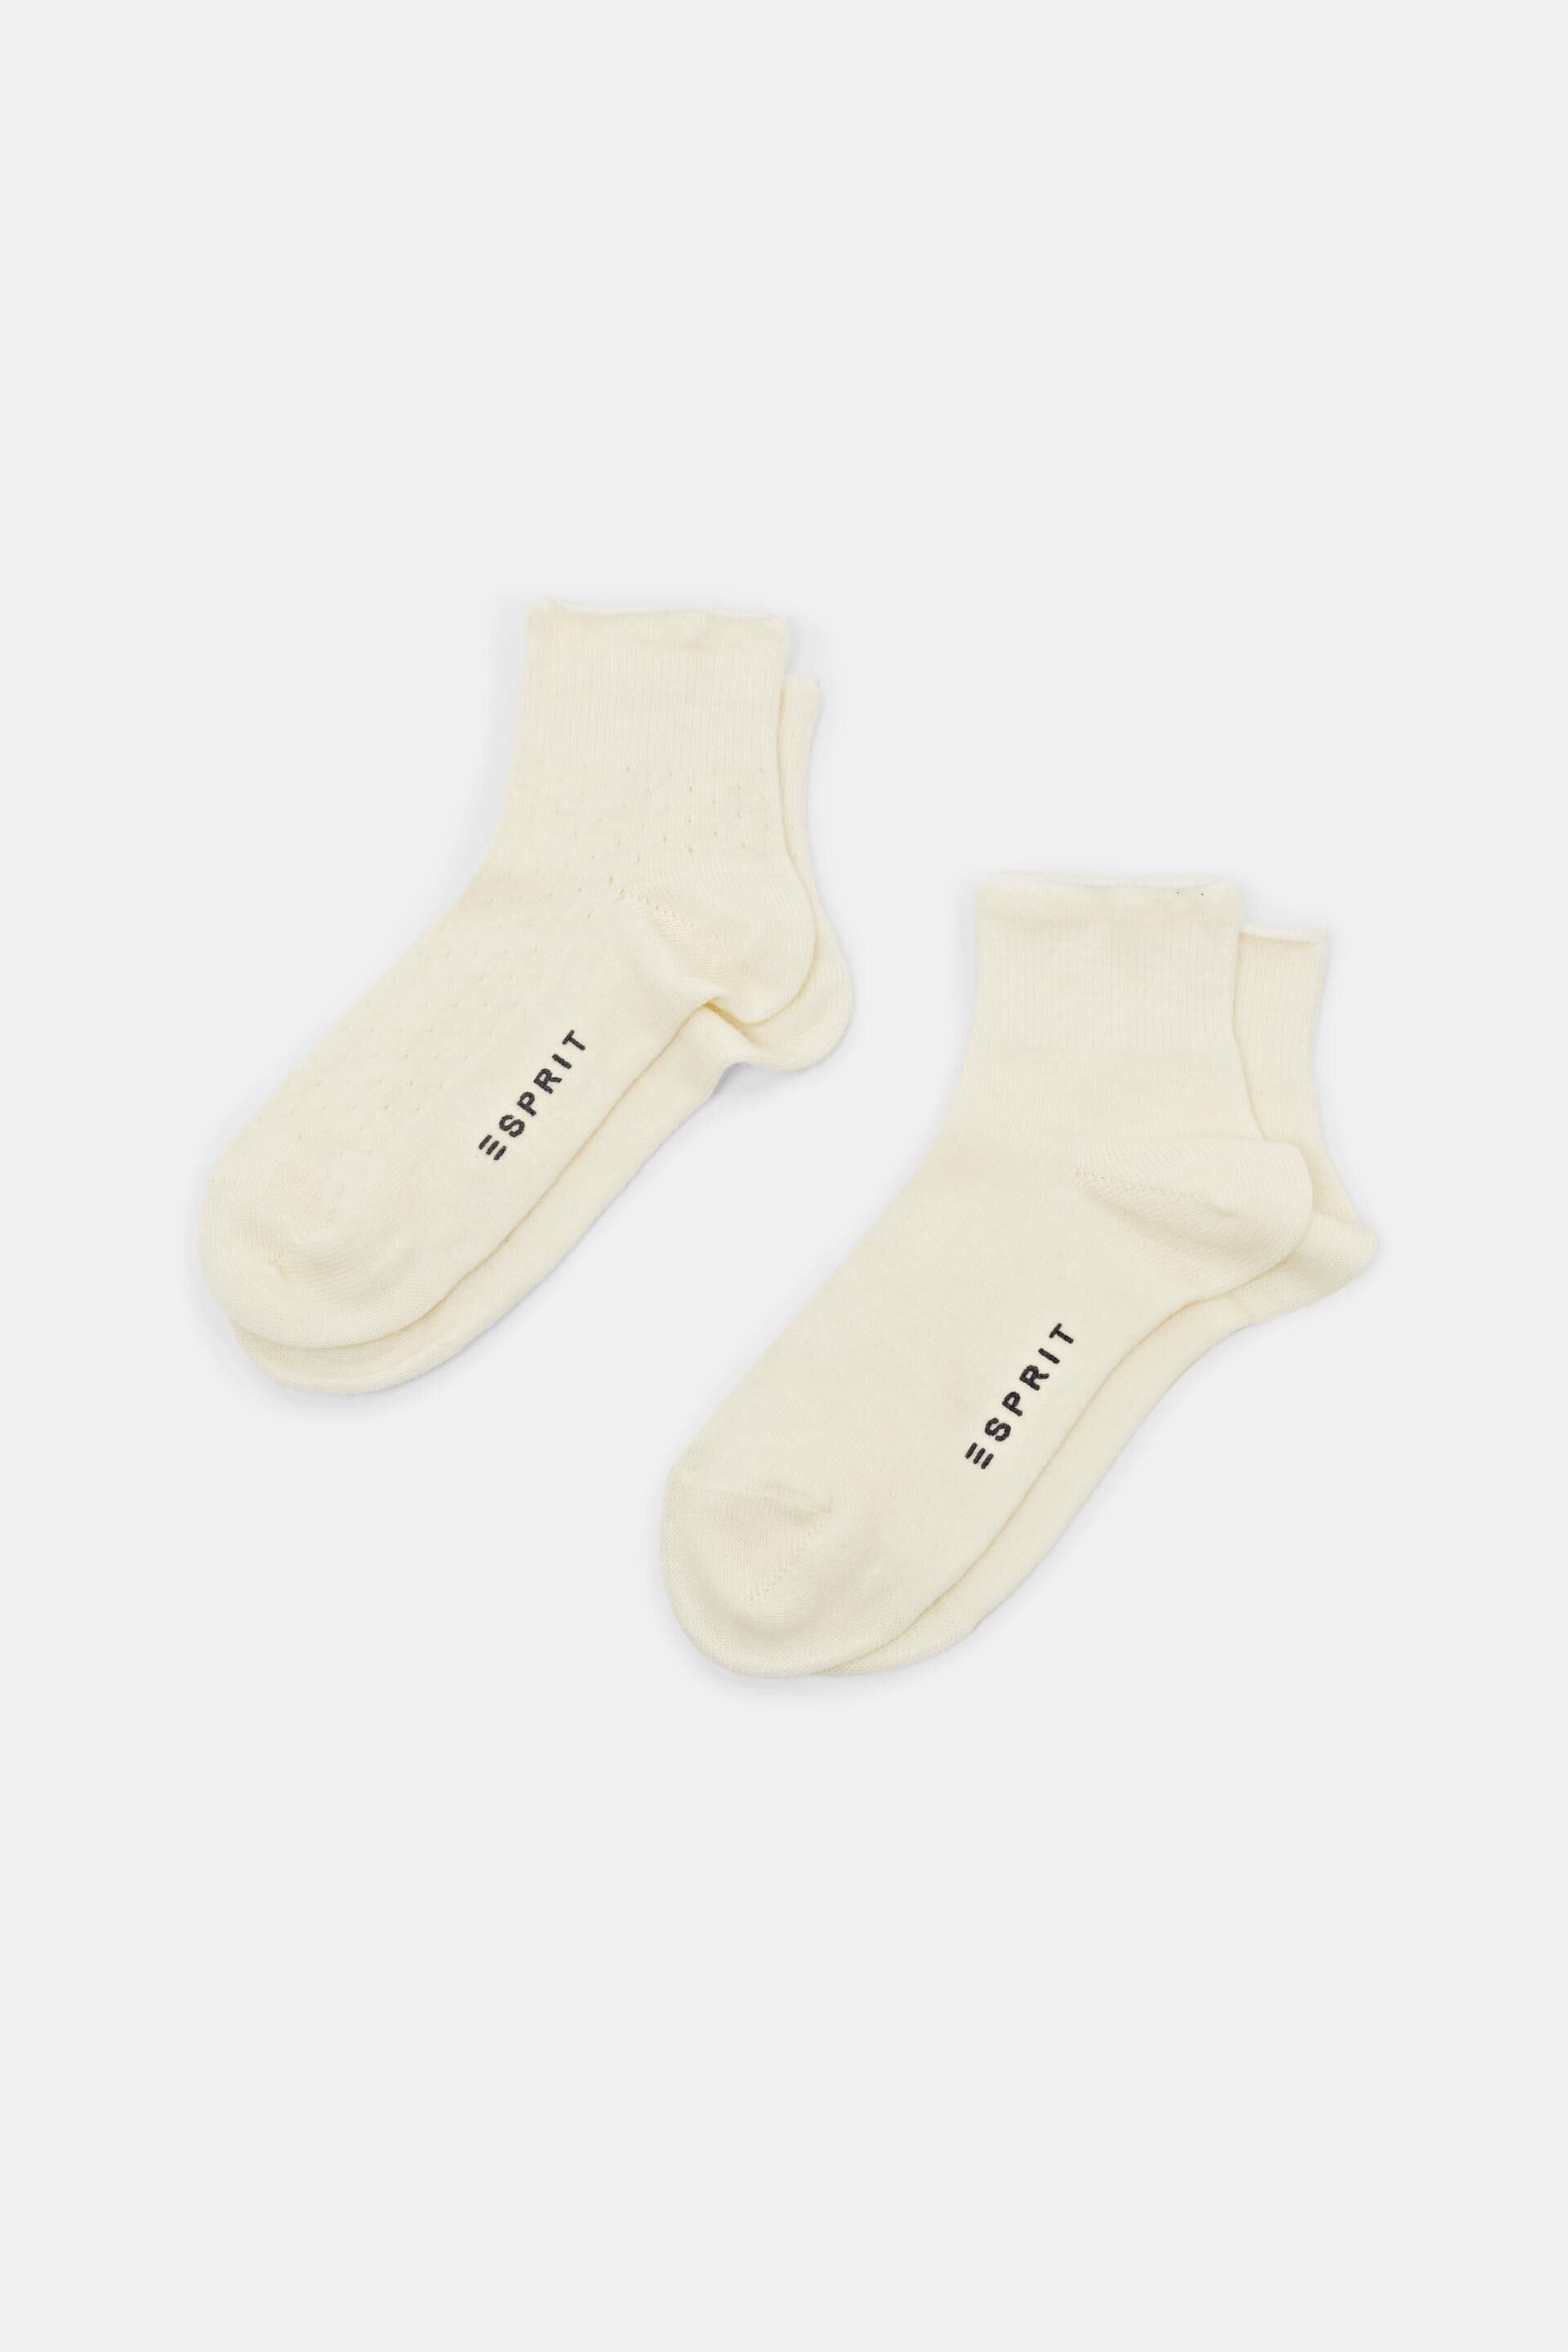 Esprit Online Store 2-pack of lace pattern wool blend socks